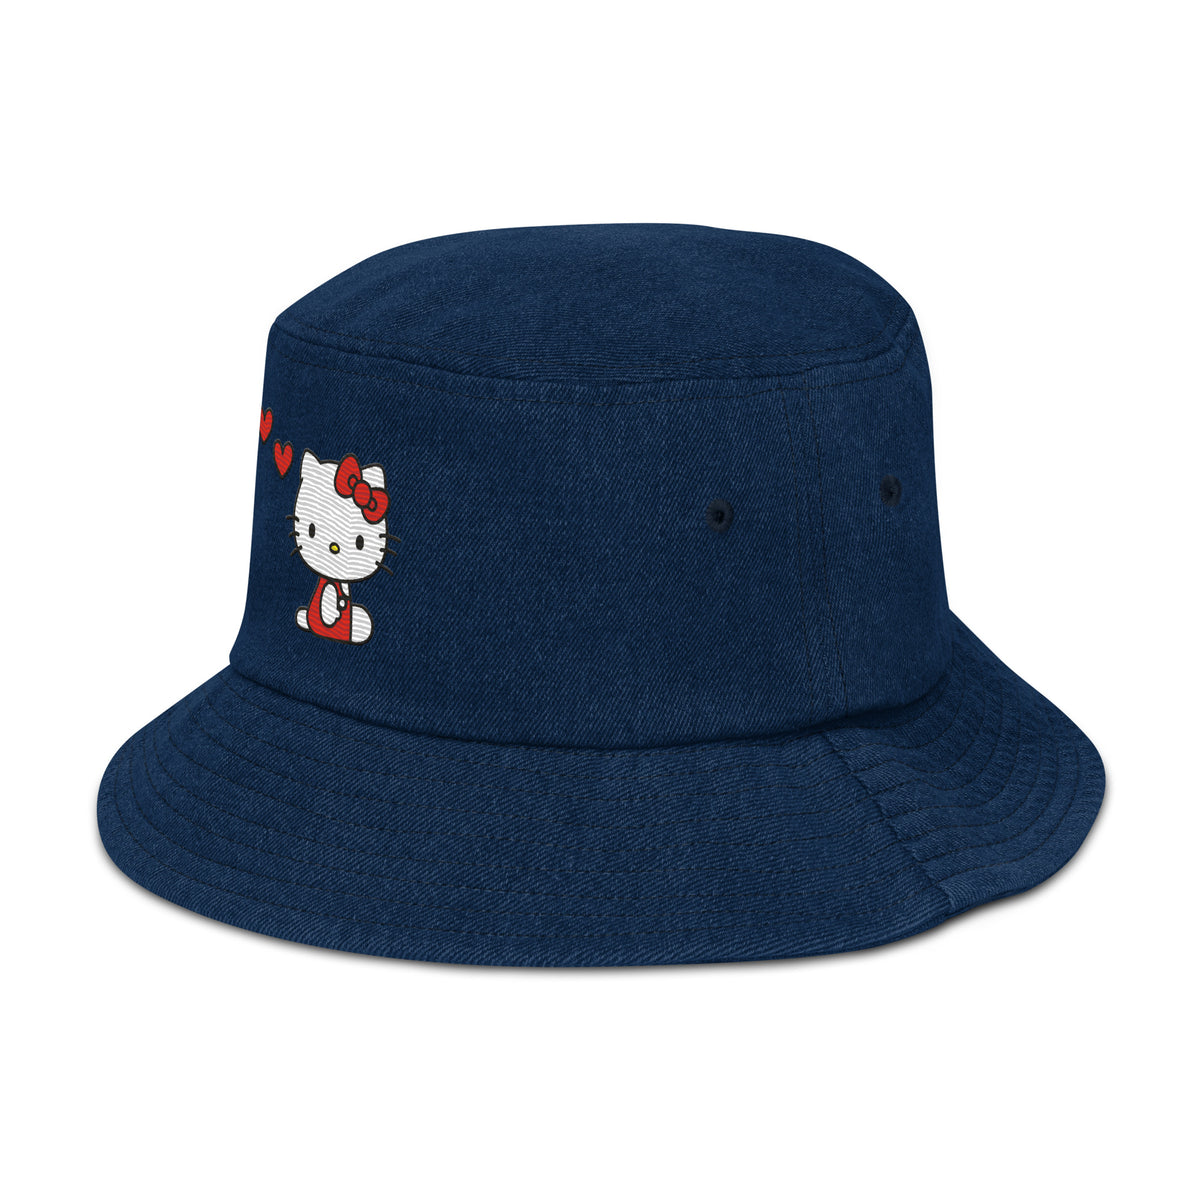 Hello Kitty Embroidered Denim Bucket Hat Apparel Printful   